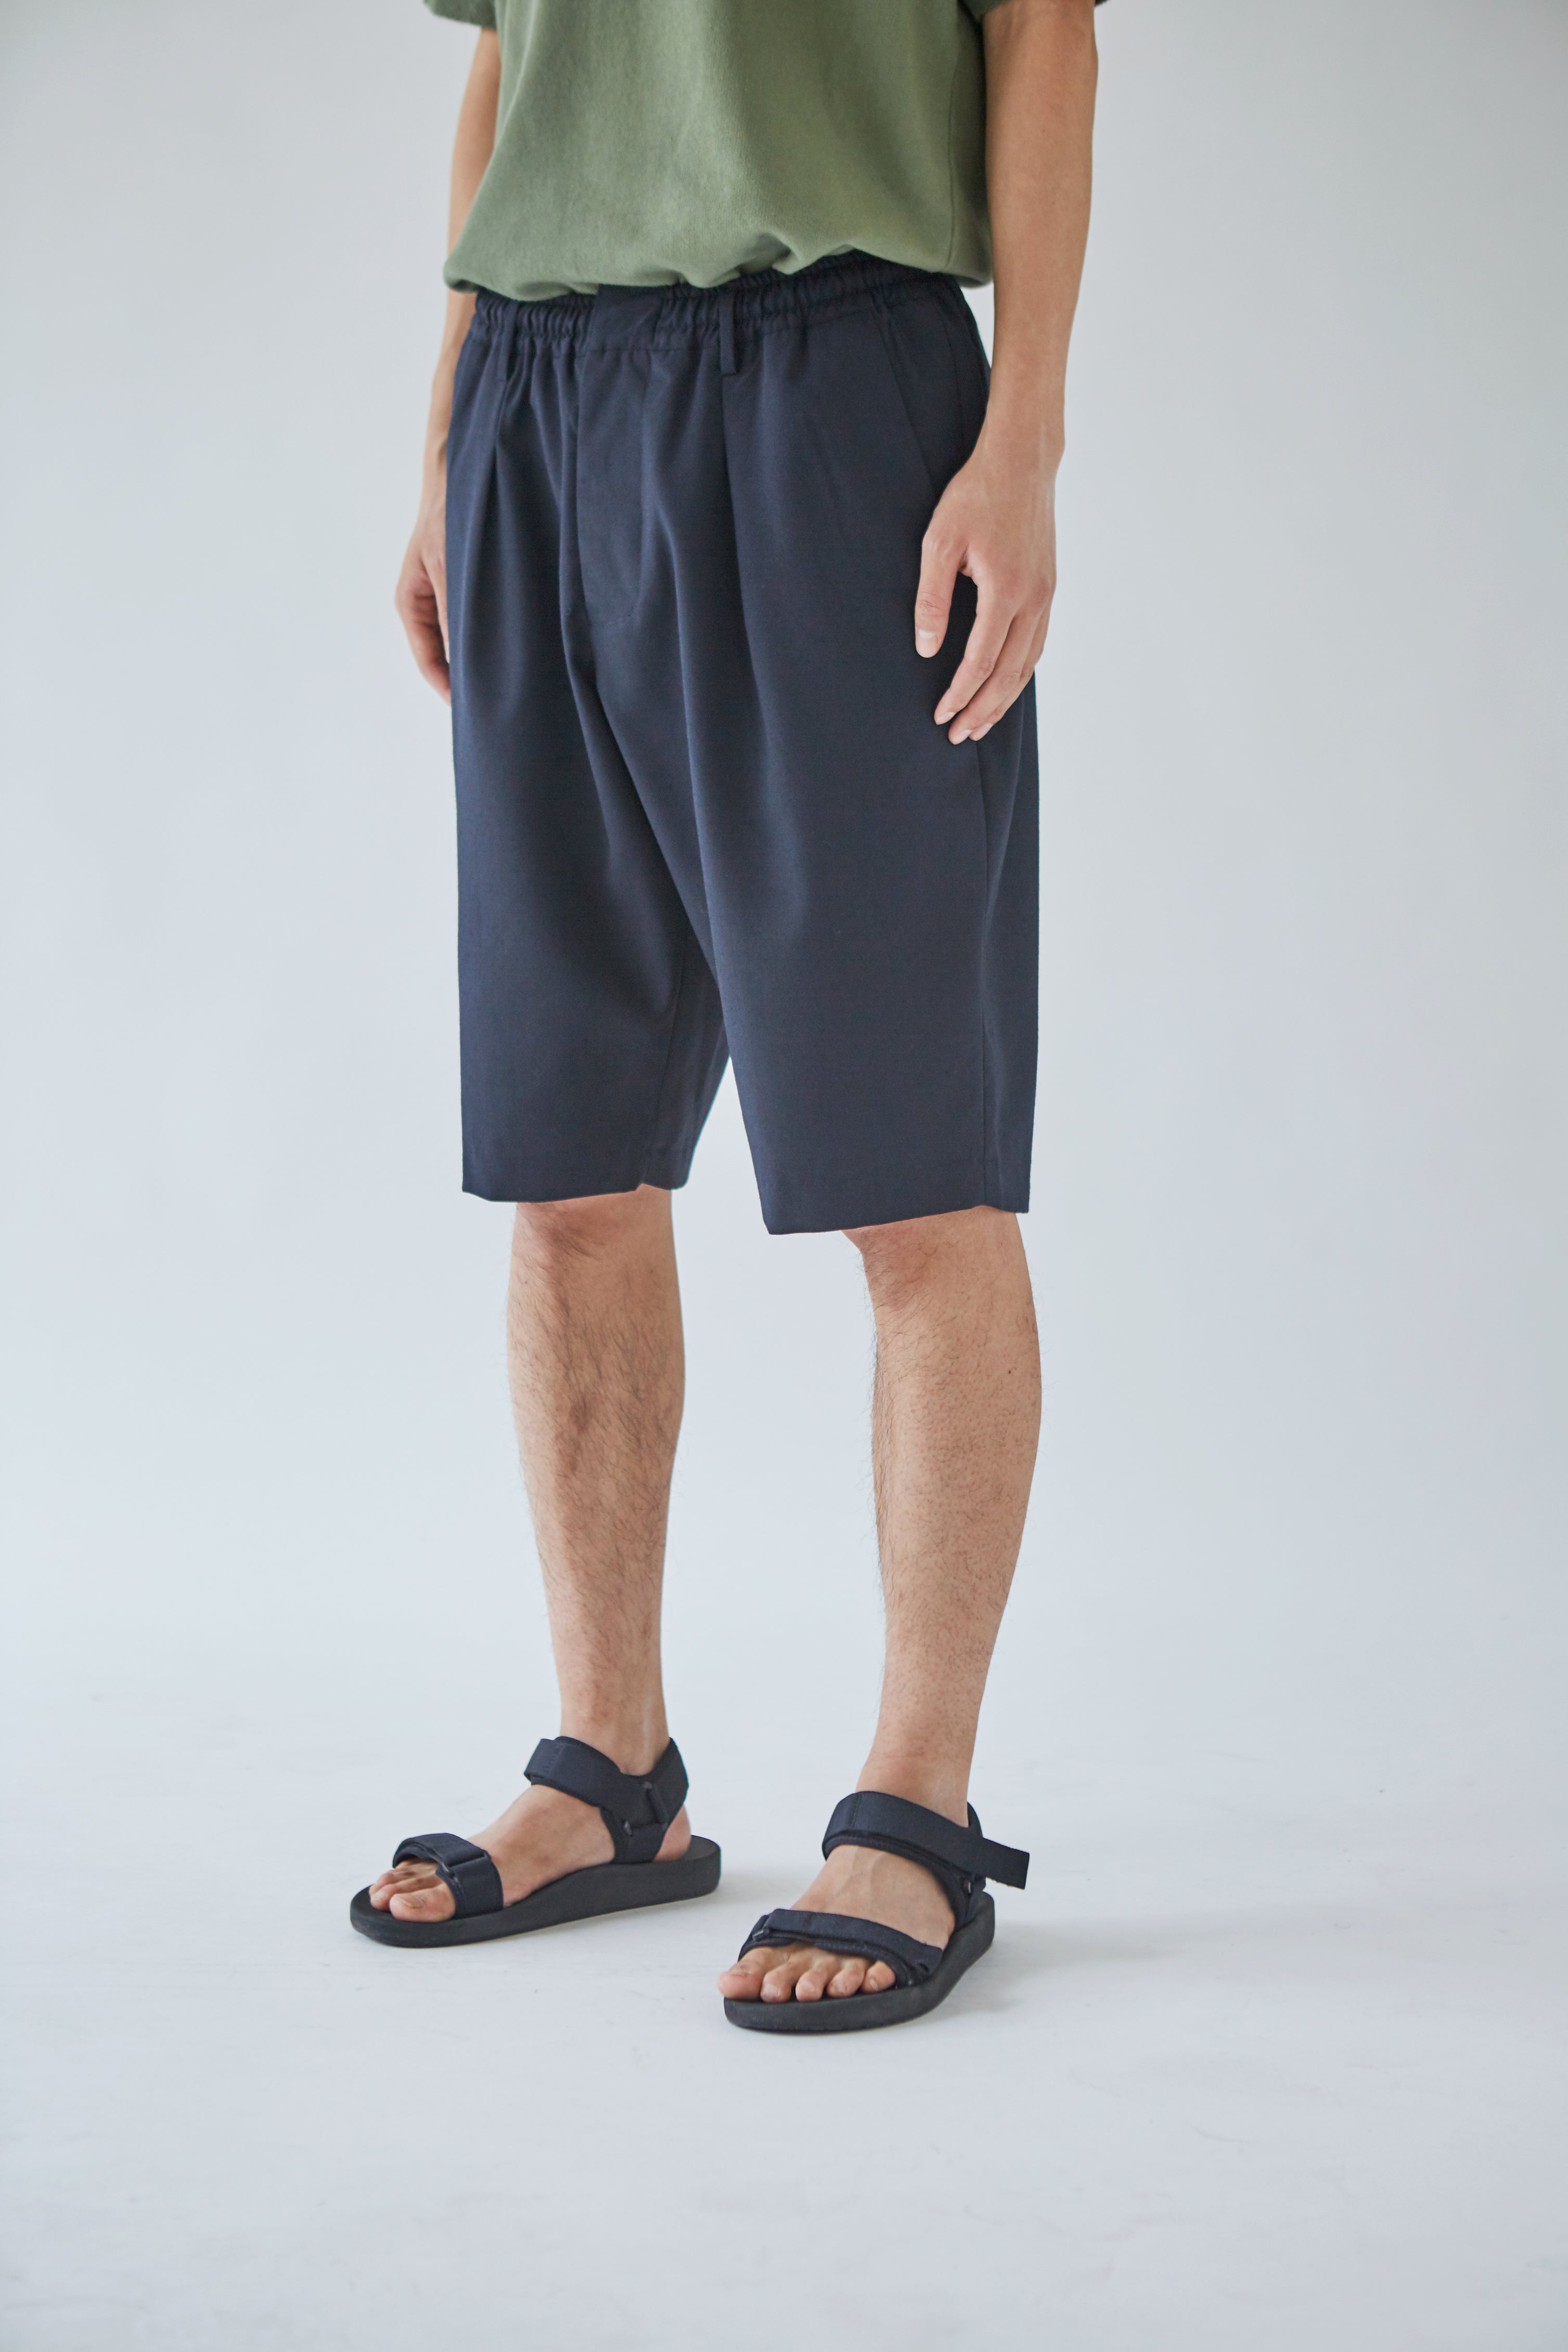 oftt - 07 - Pleated Shorts-navy- wool blend